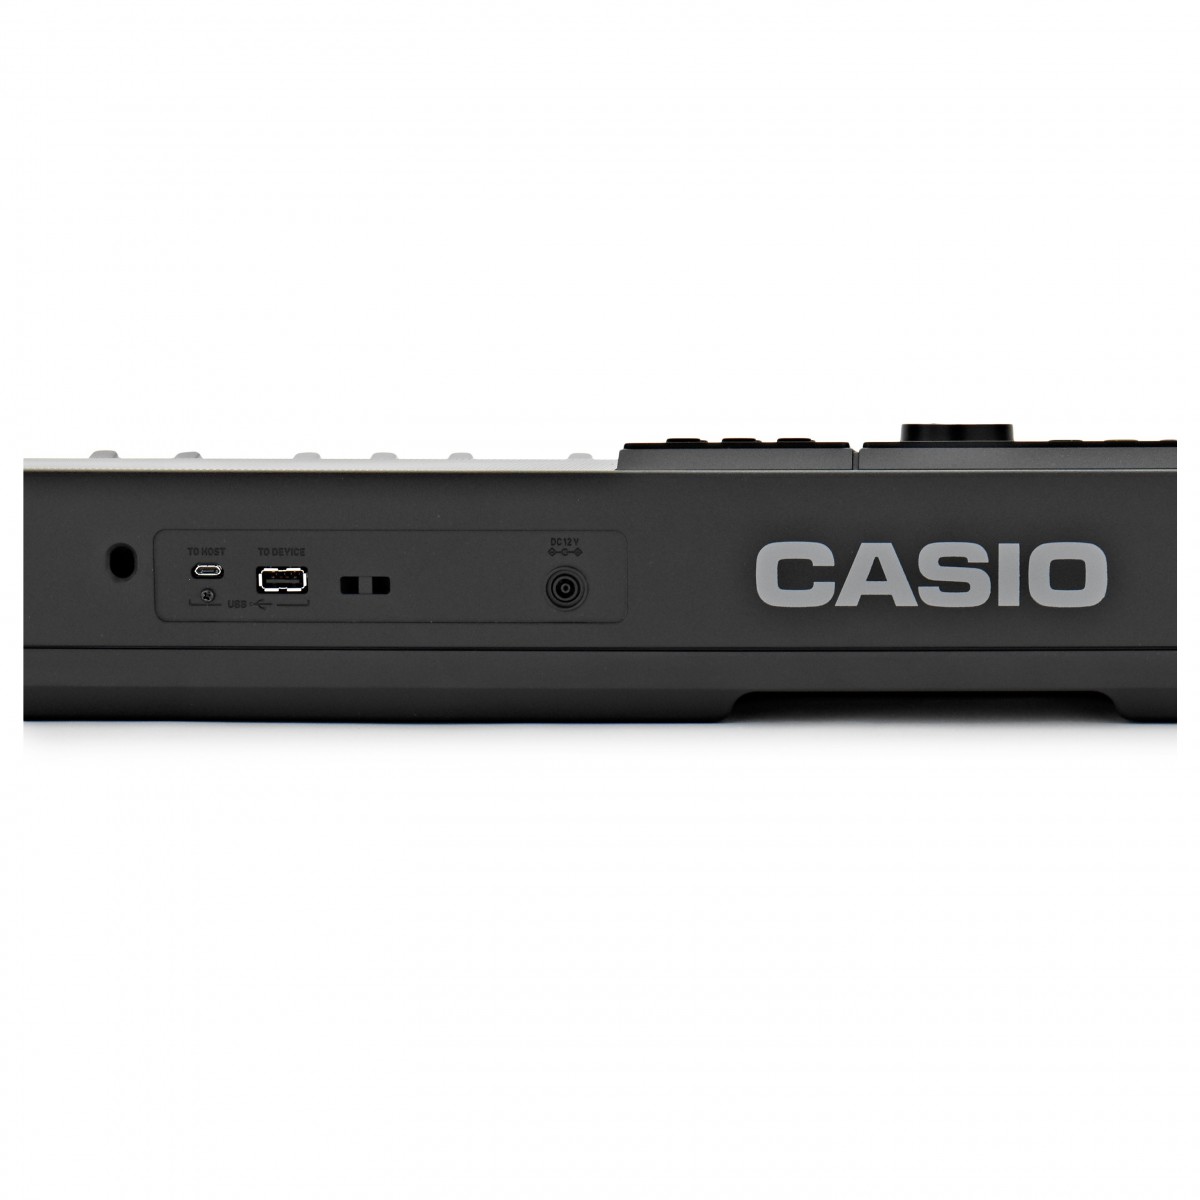 Синтезатор CASIO CT-S1000V